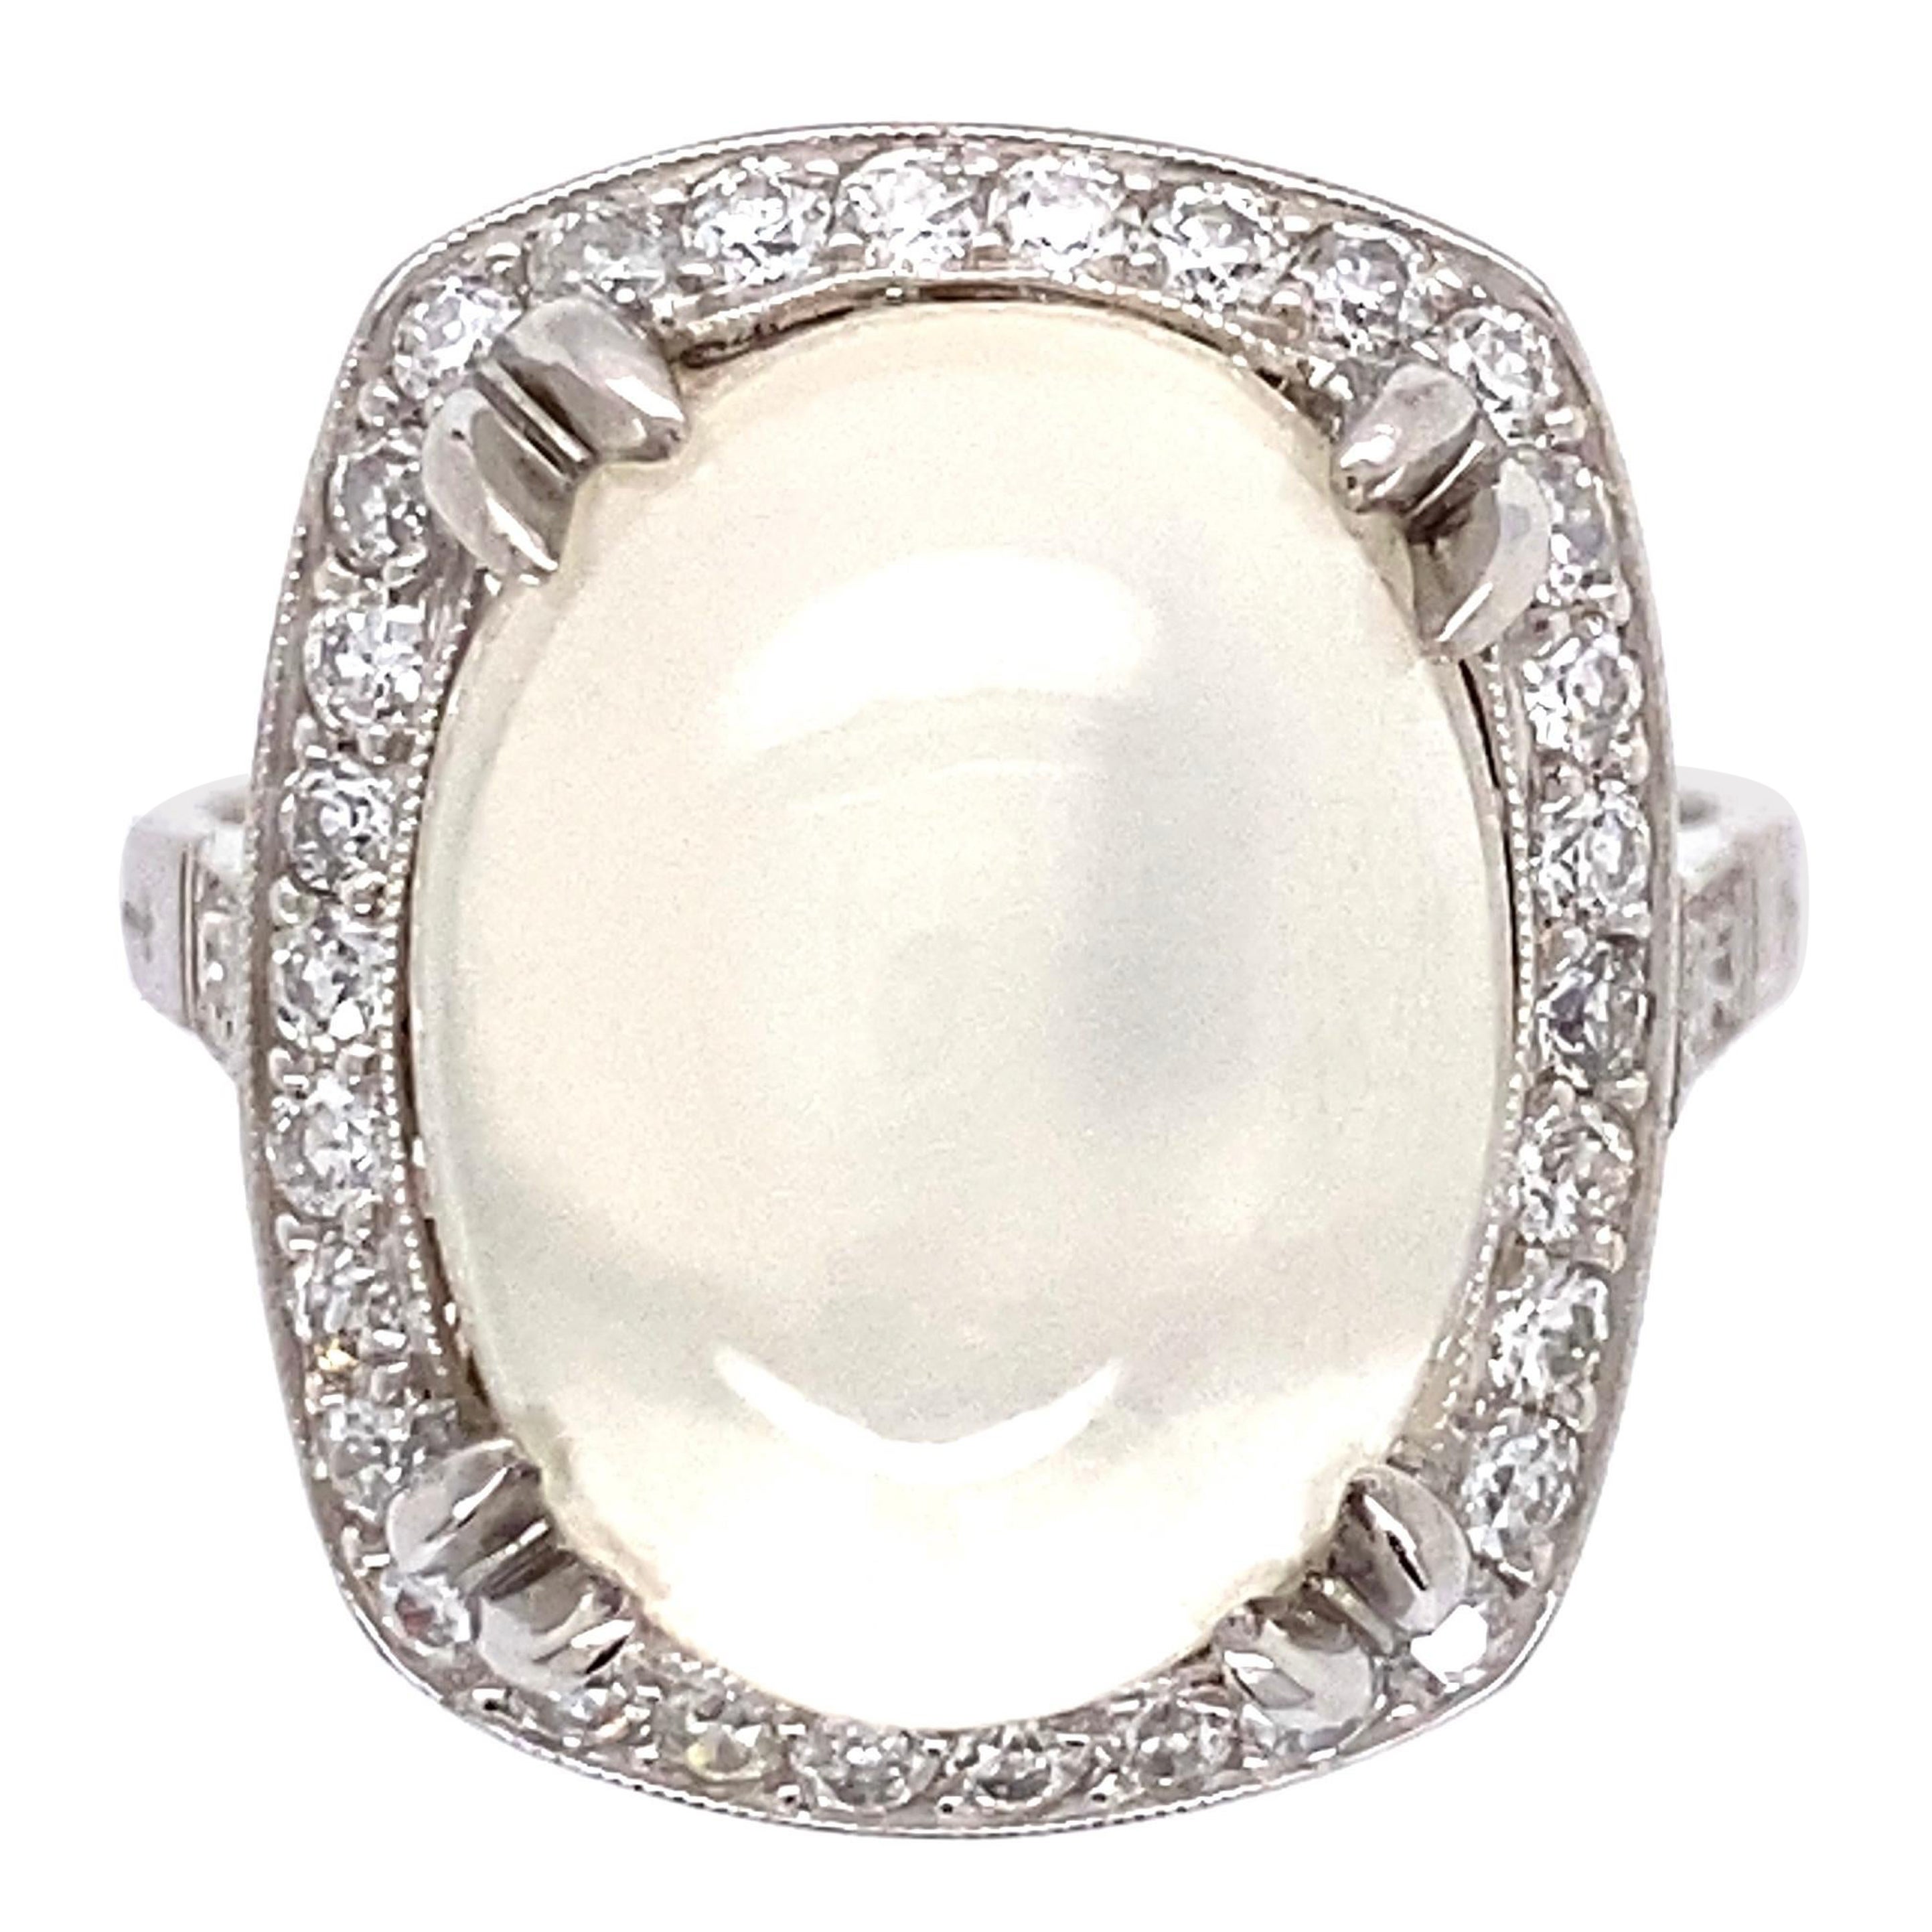 11.05 Carat Moonstone Diamond Platinum Cocktail Ring Fine Estate Jewelry